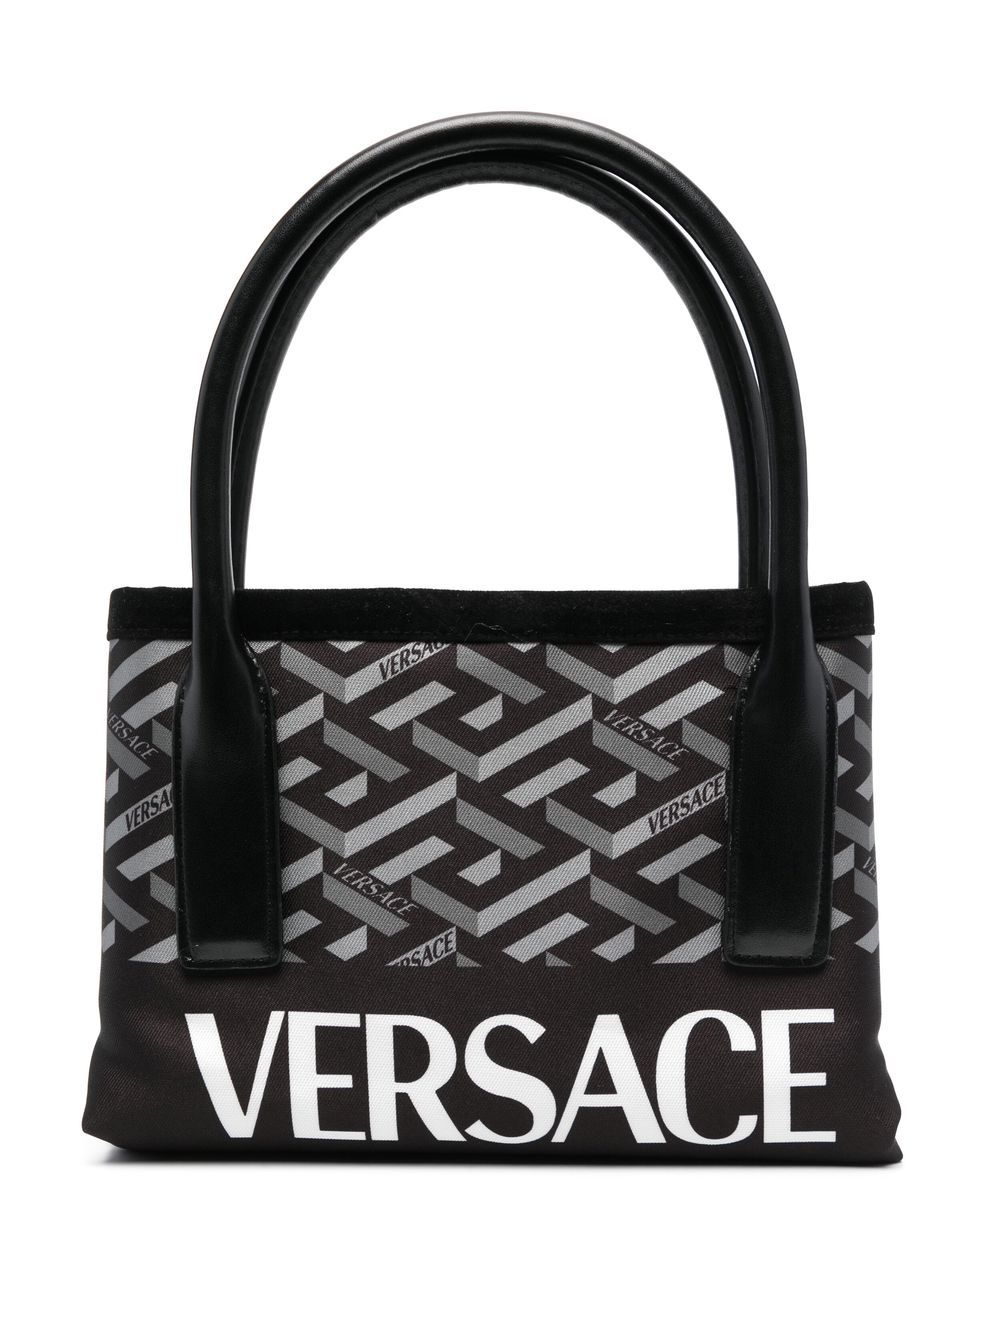 Versace La Greca Pattern Top Handle Tote Bag in Black